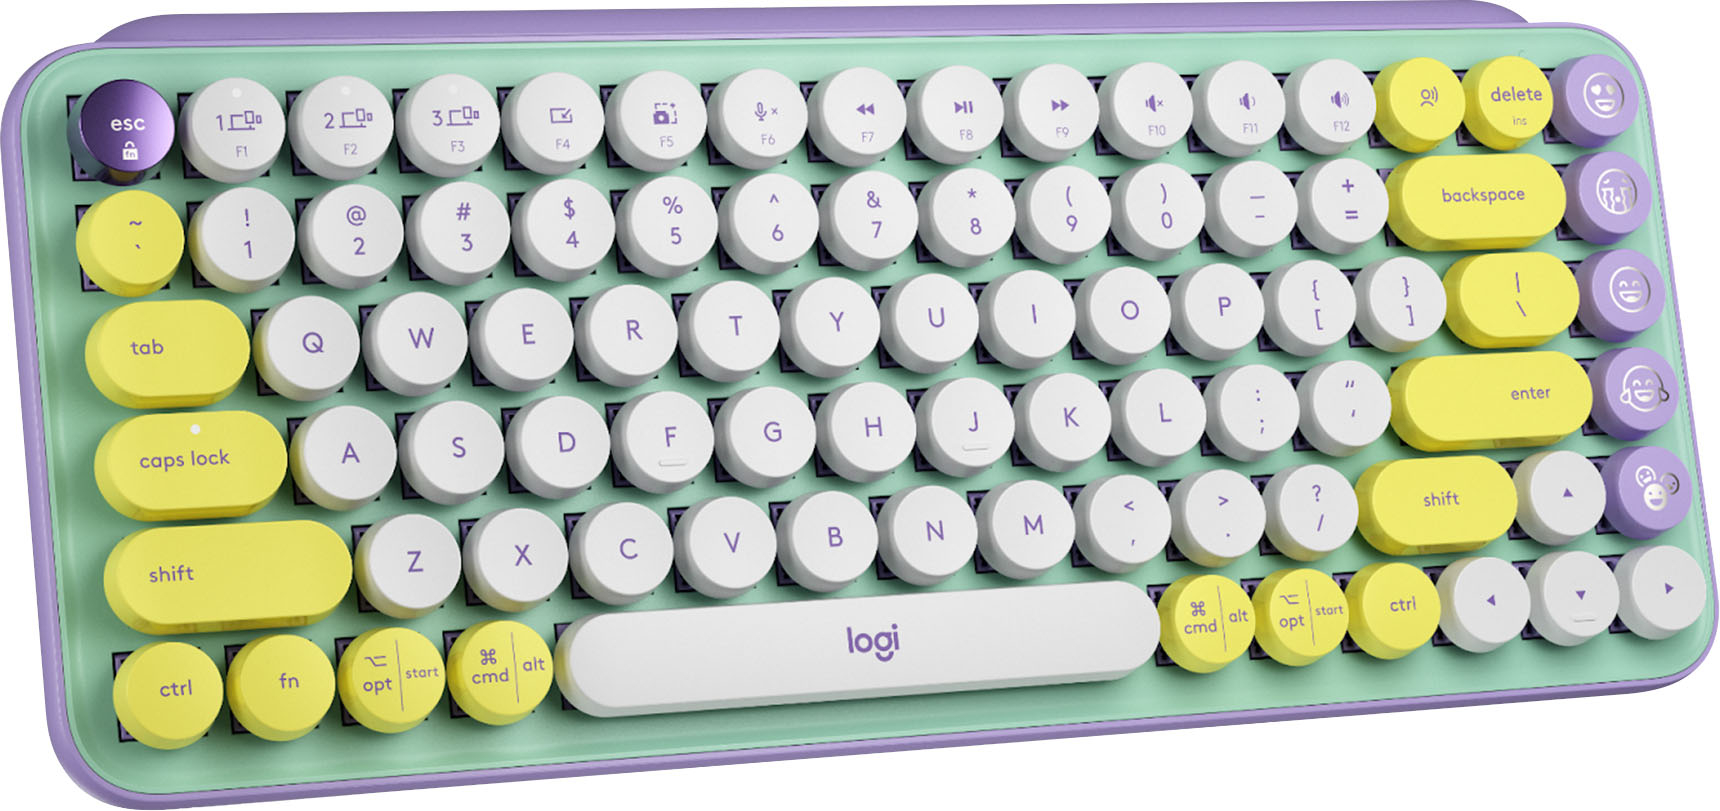 Logitech G715 Gaming Keyboard - Wireless Connectivity - Bluetooth - RGB LED  - 87 Key Volume Control Hot Key(s) - ChromeOS - PC, Mac - Mechanical